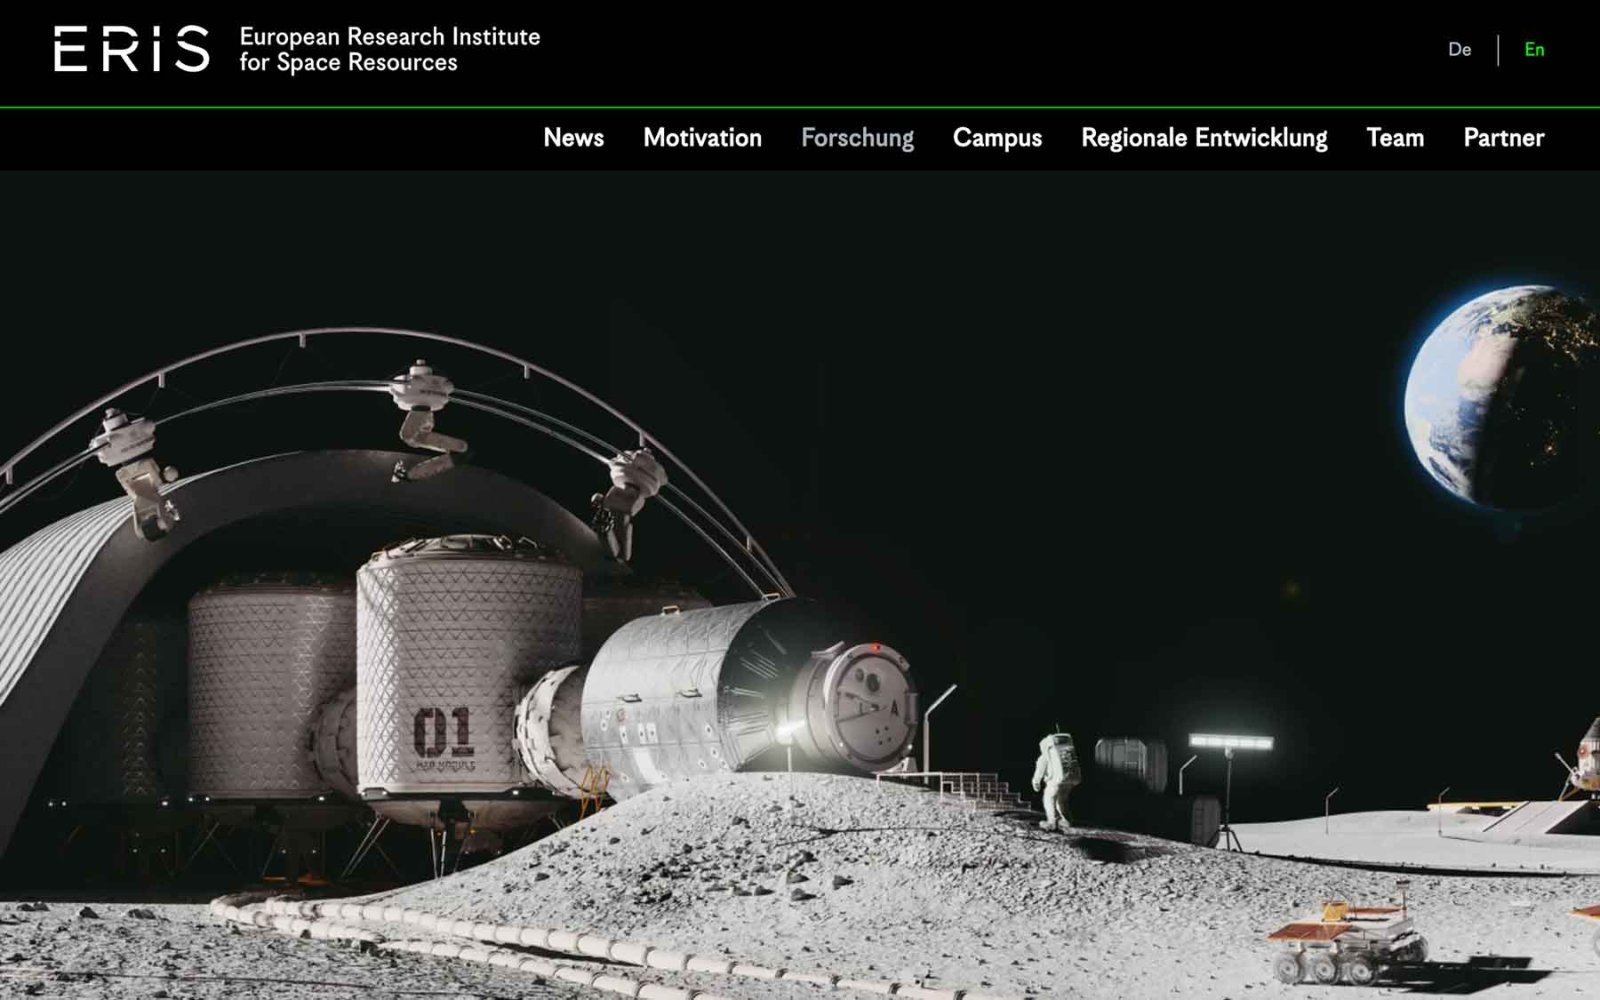 Startseite ERIS - European Research Institute for Space Resources